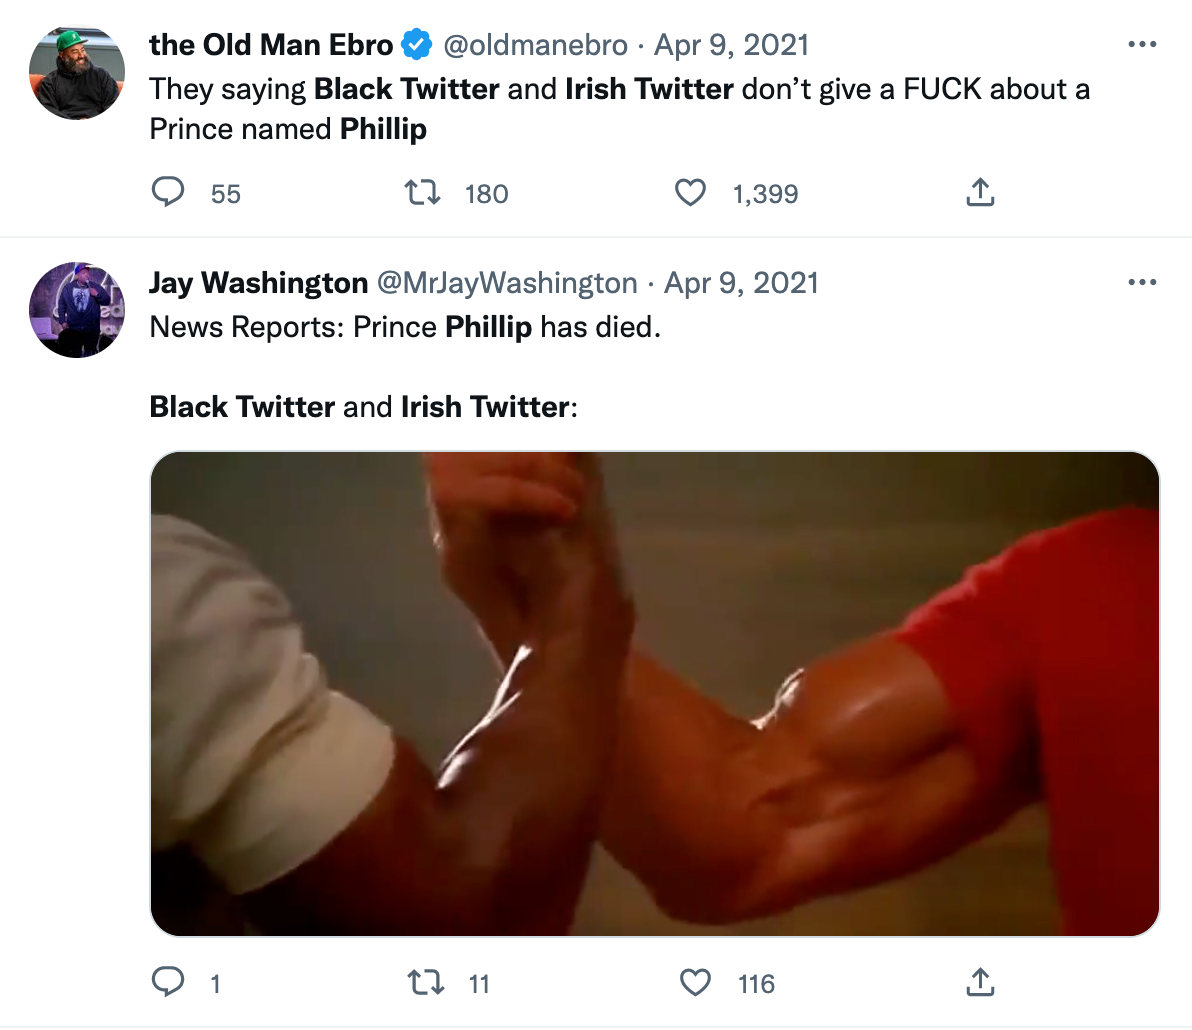 Handshake Meme Unites Twitter Users on Common Ground